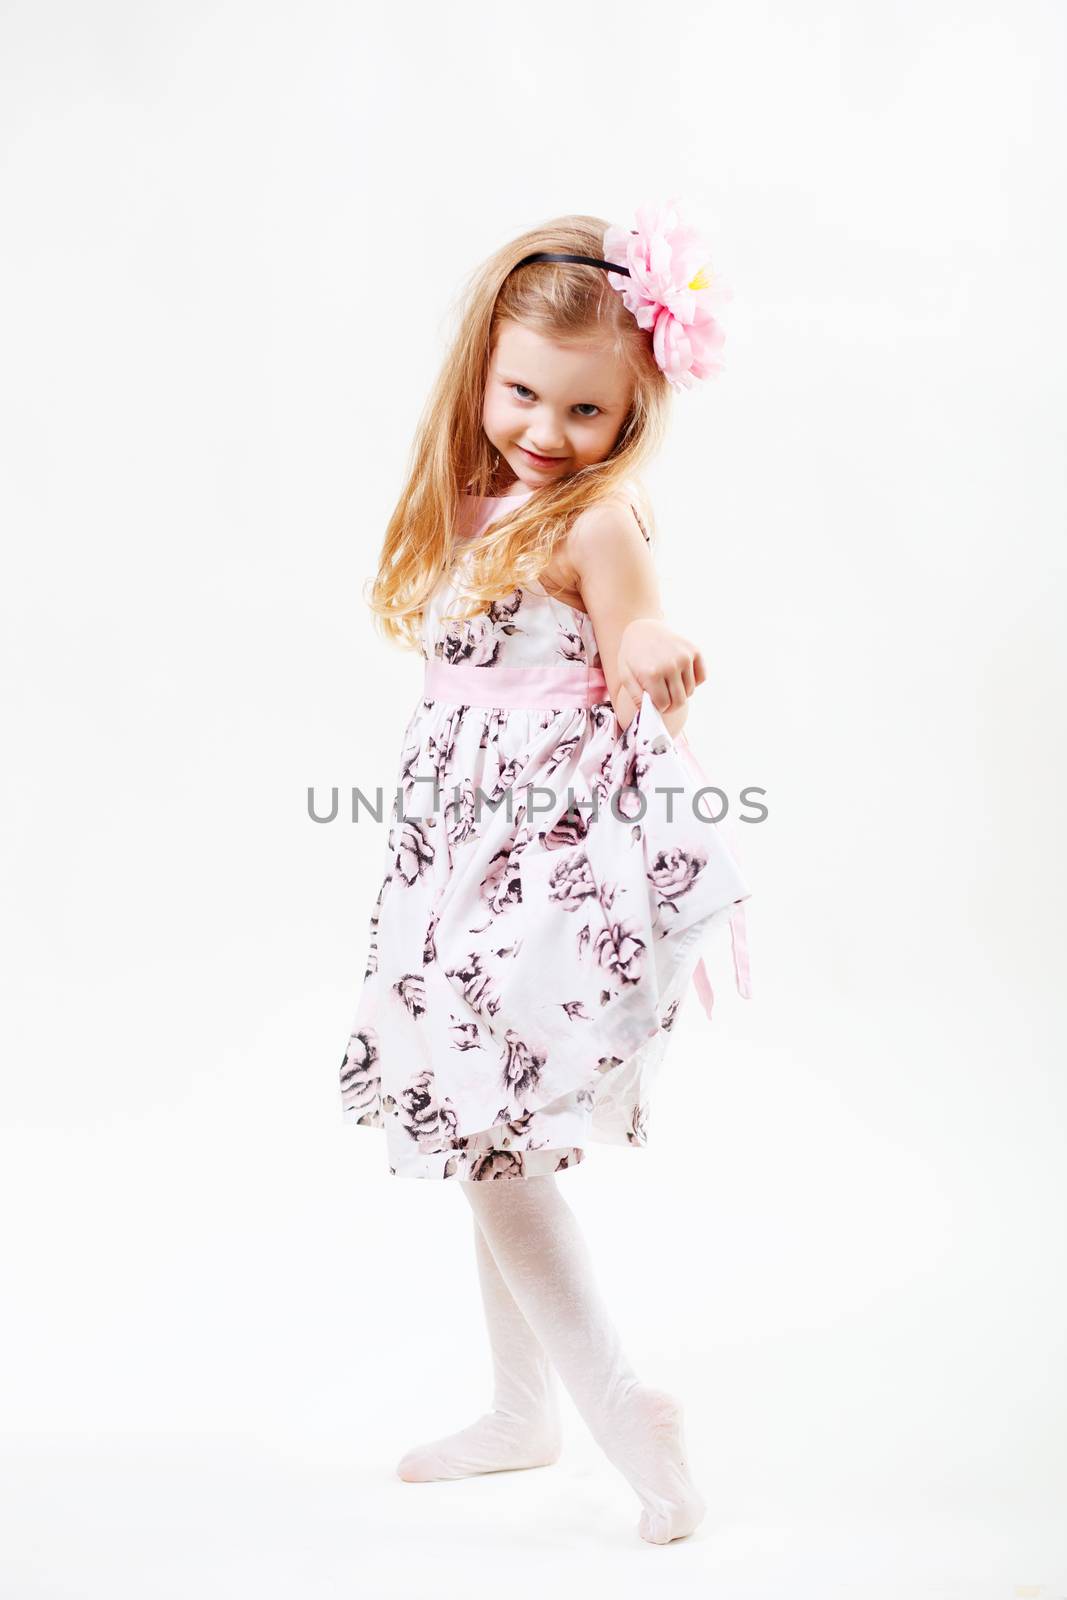 Full length portrait of a cute little blonde girl dancing against white background